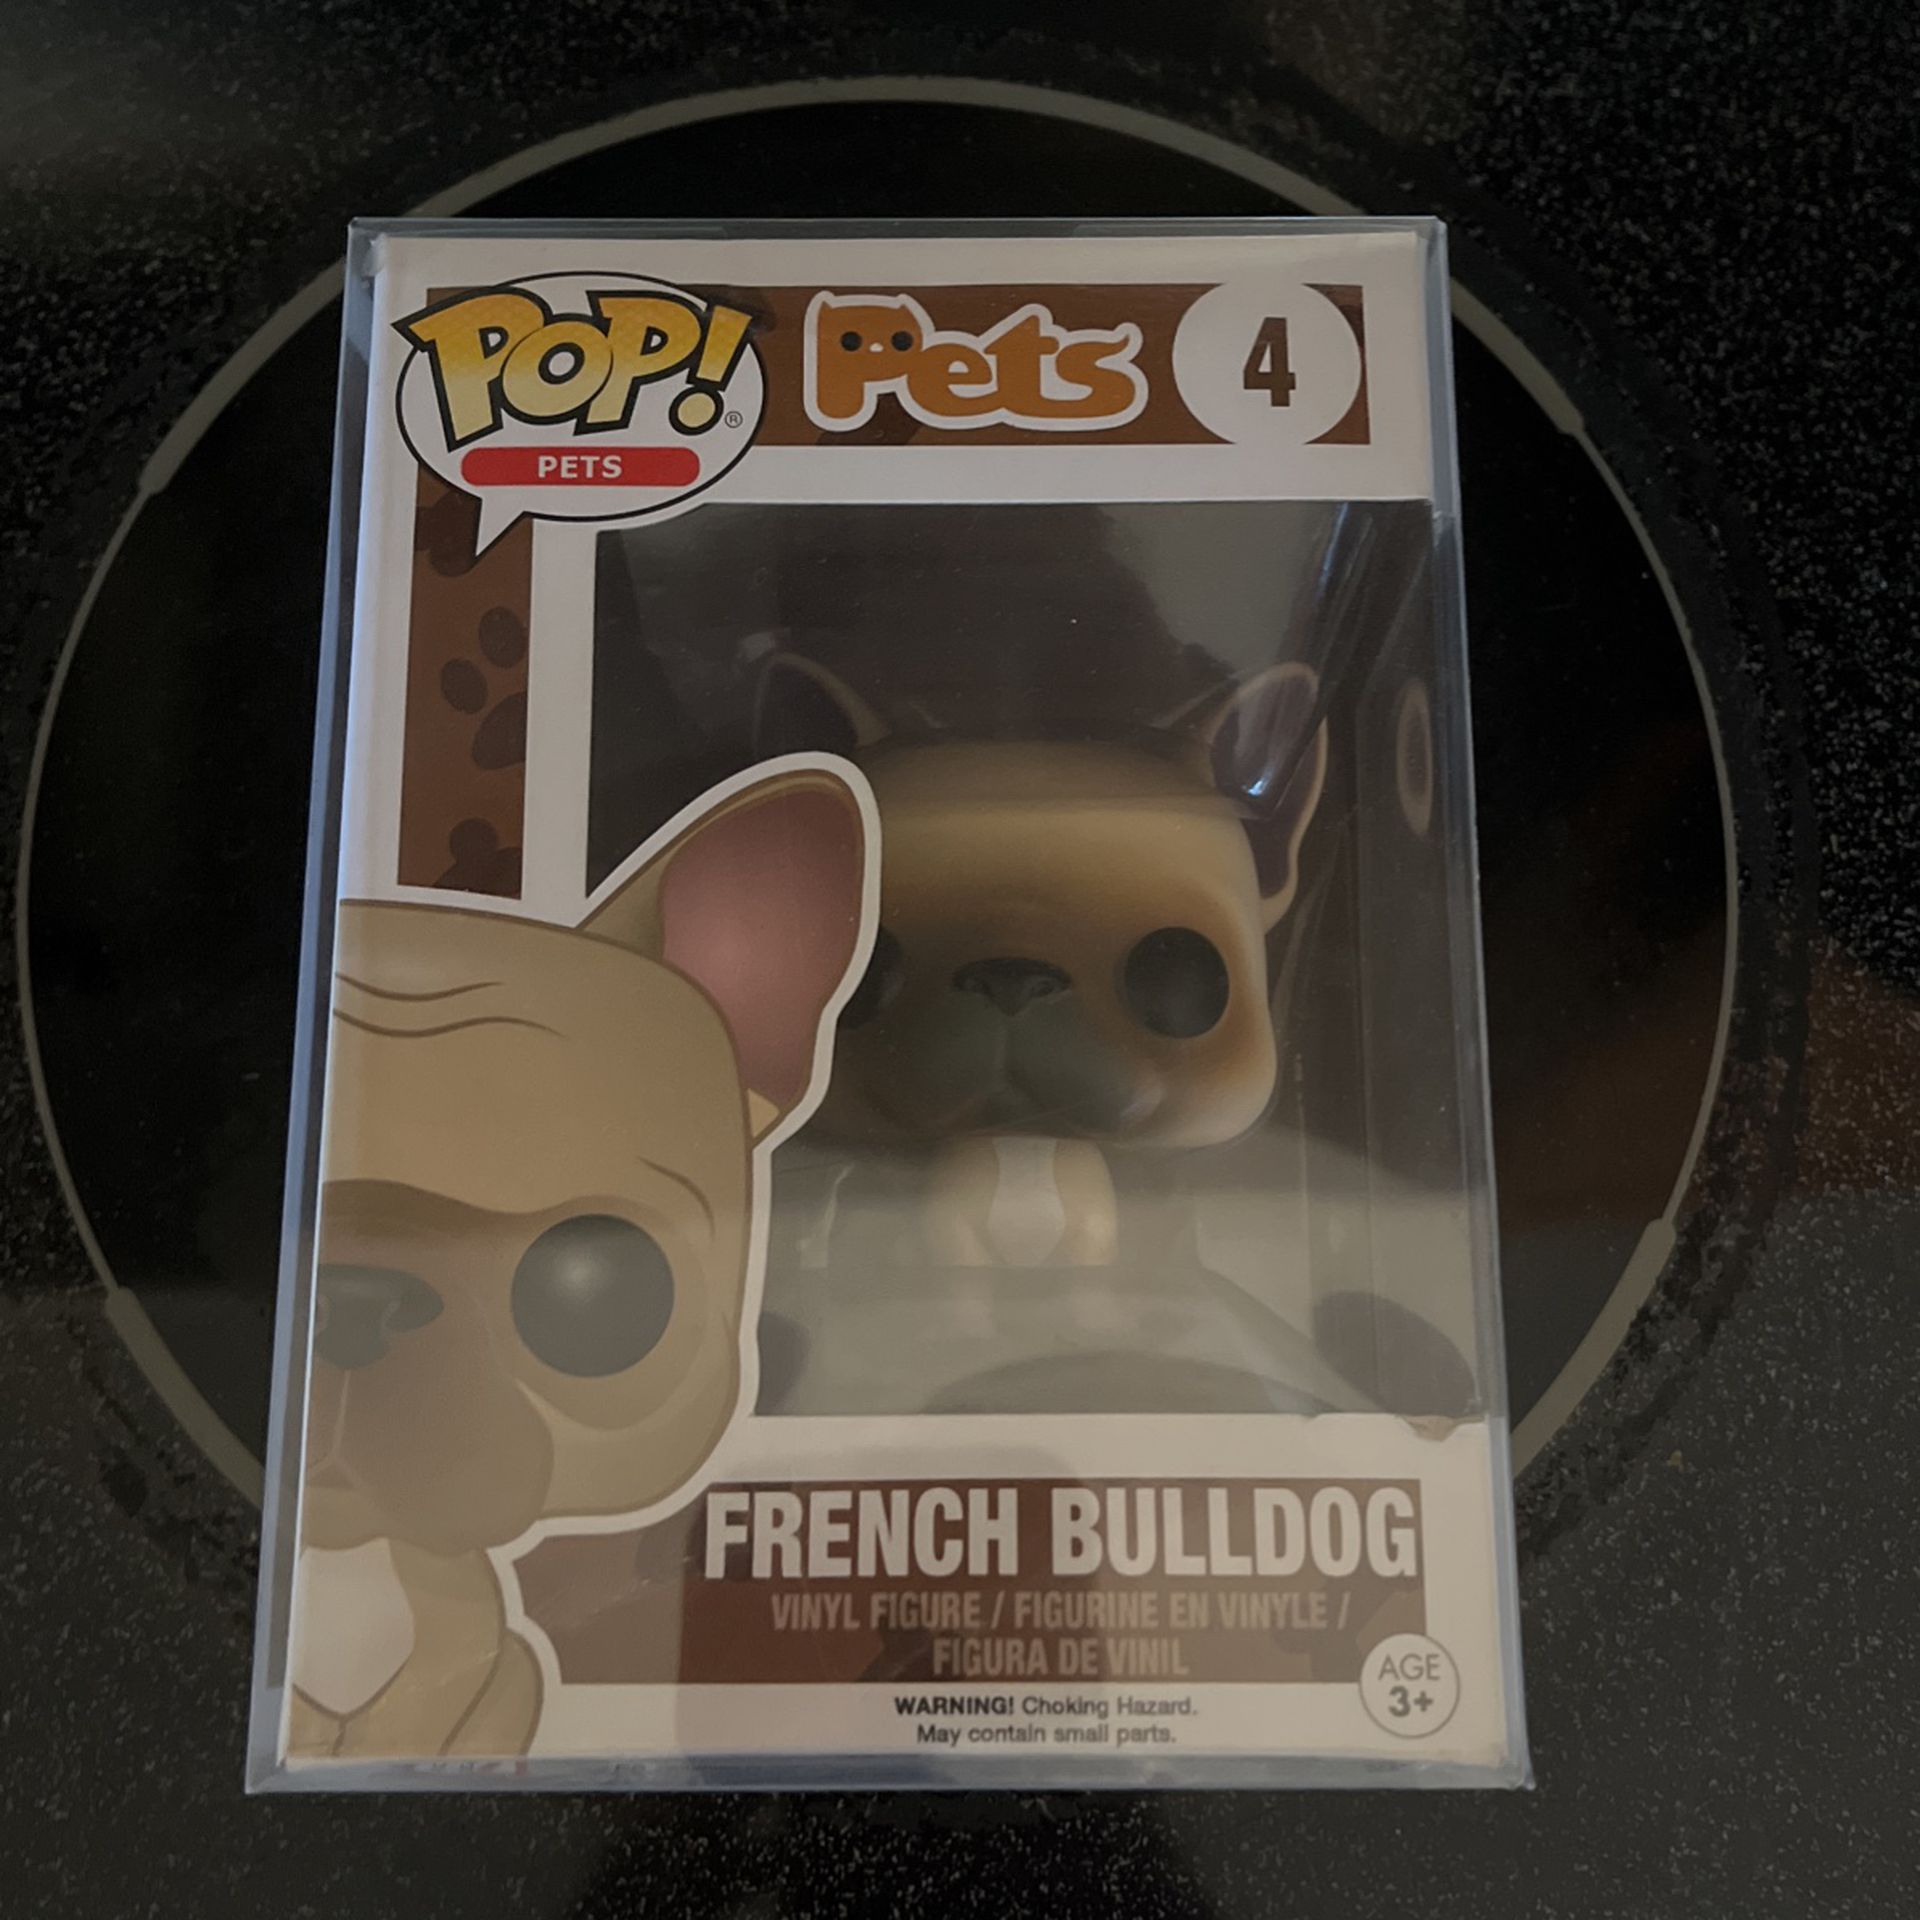 Pop! Pets Gray and White French Bulldog Funko Pop! Vinyl Figure